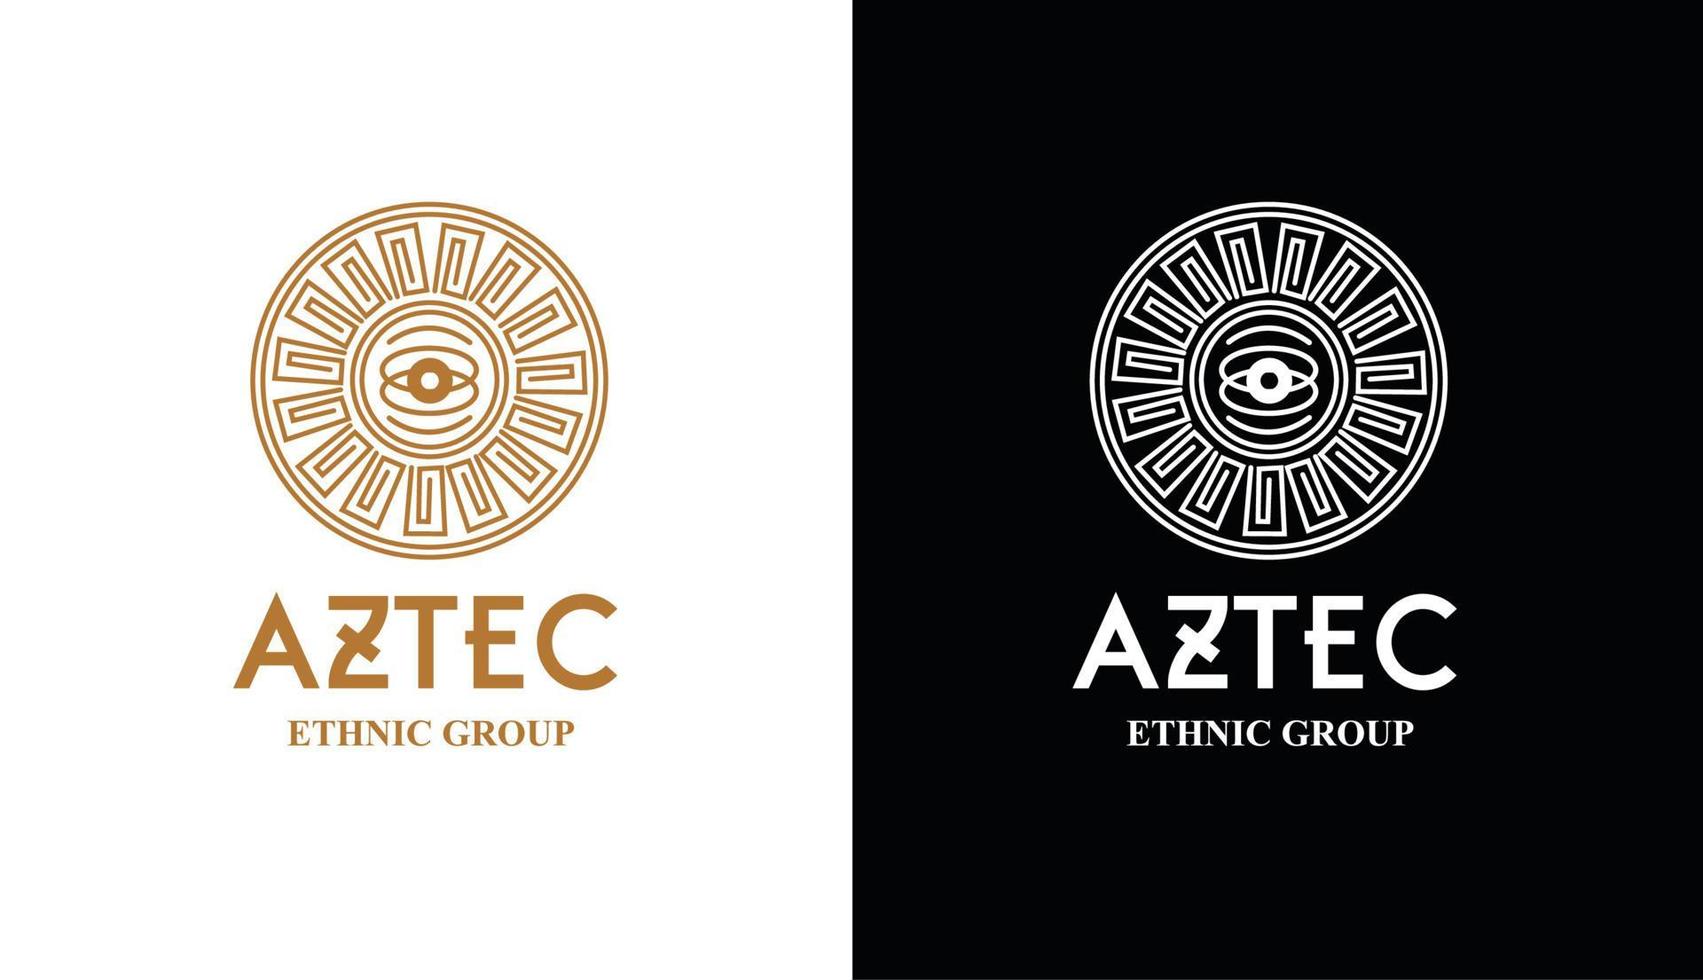 Aztec eye logo vector, design with ancient greek circle border frame vector